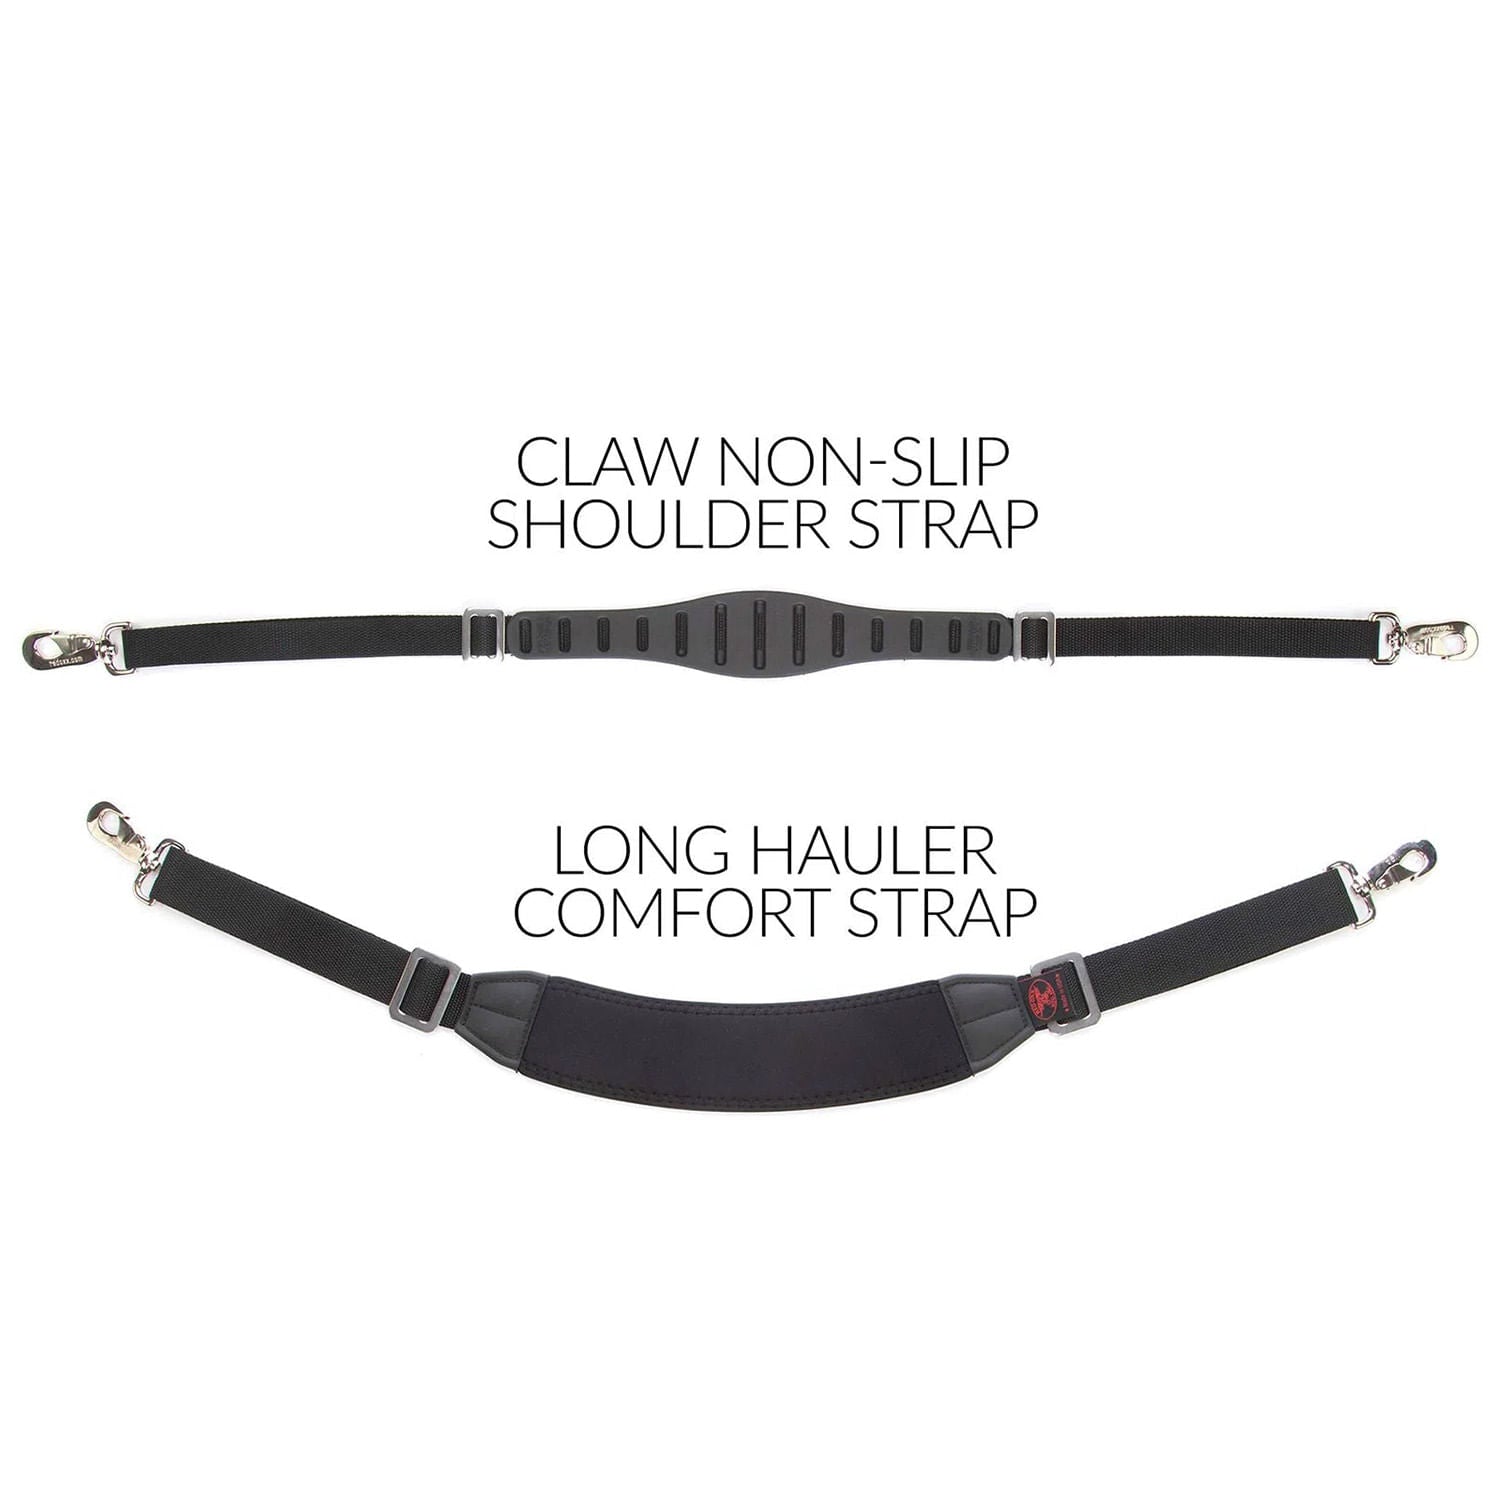 comparison of Claw Non Slip shoulder strap to the Long Hauler Comfort Strap. 